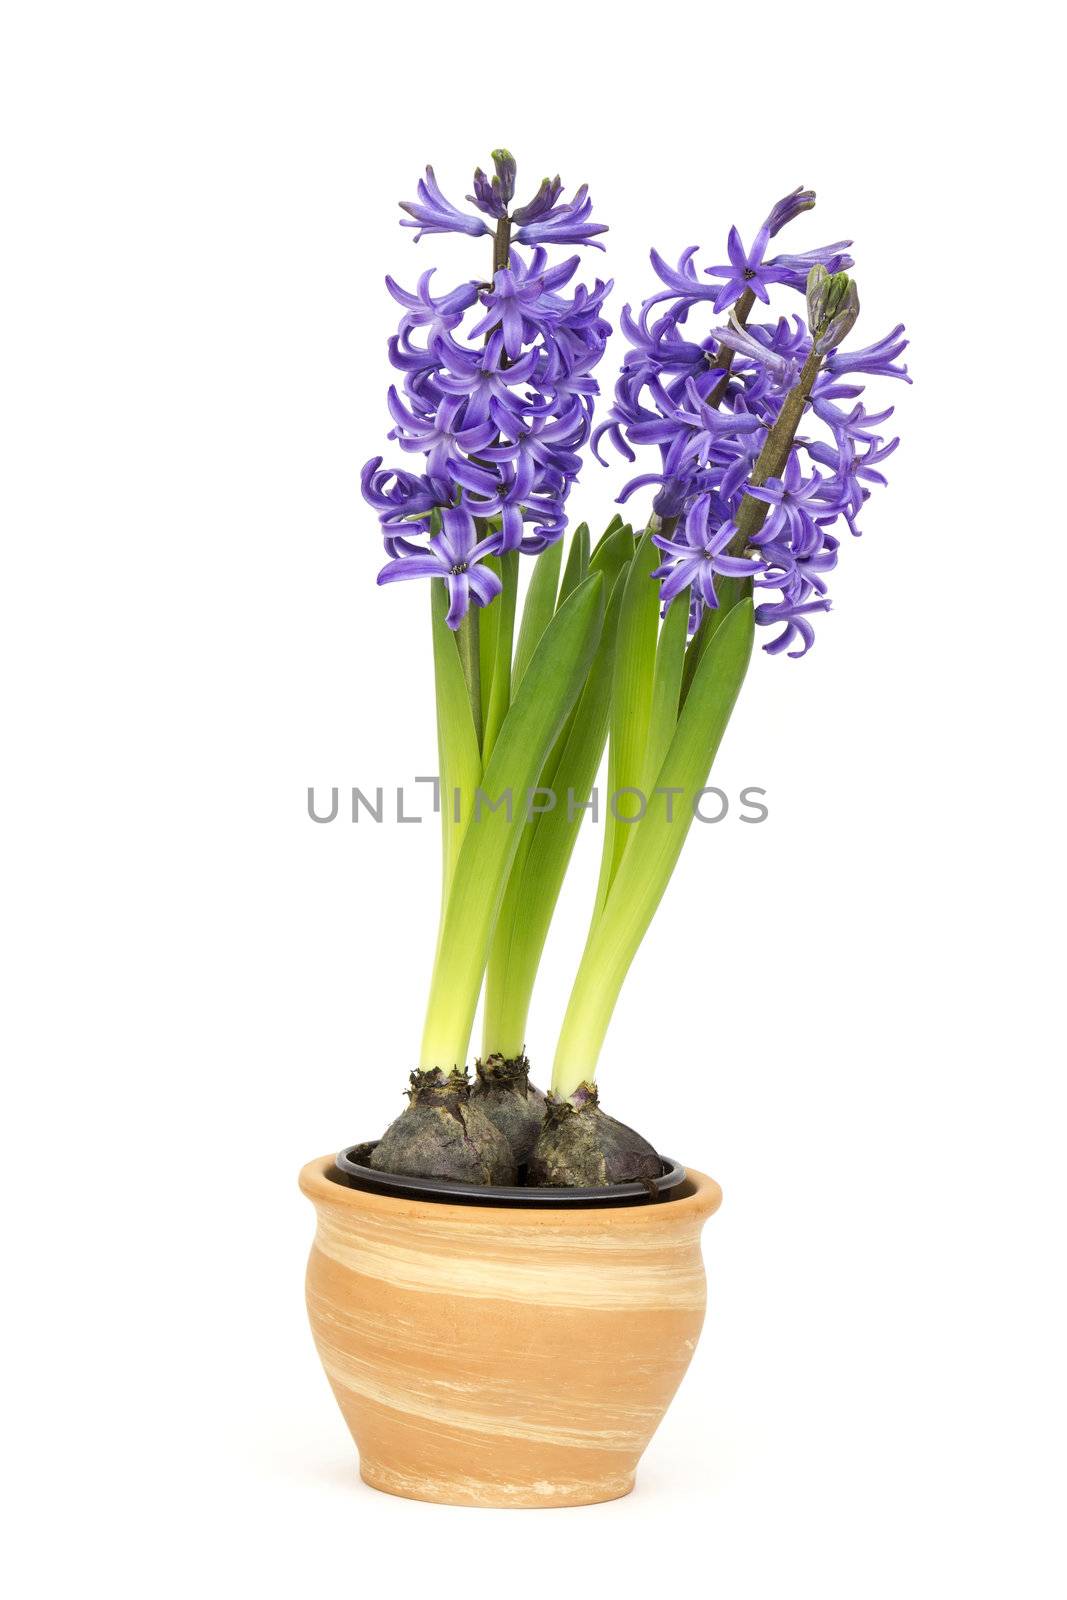 spring hyacinth flower in a pot  by miradrozdowski